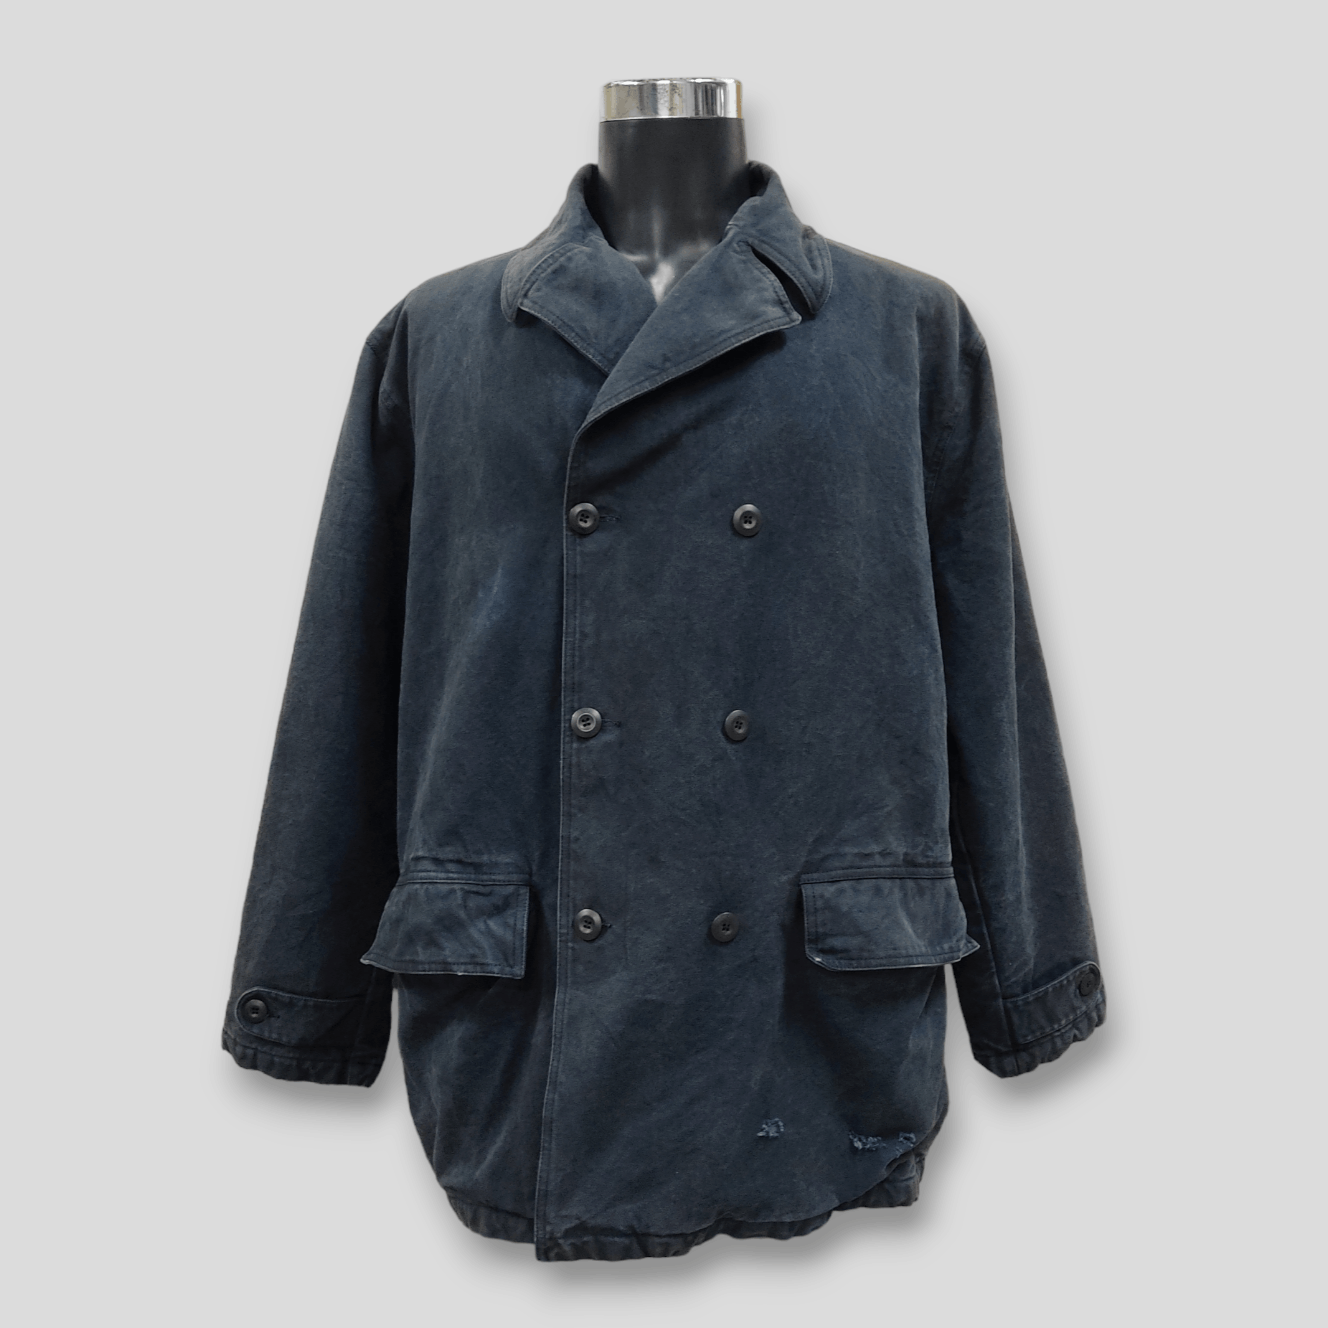 Vintage BONEVILLE AW94 Heavy Cotton Wool Jacket - 1